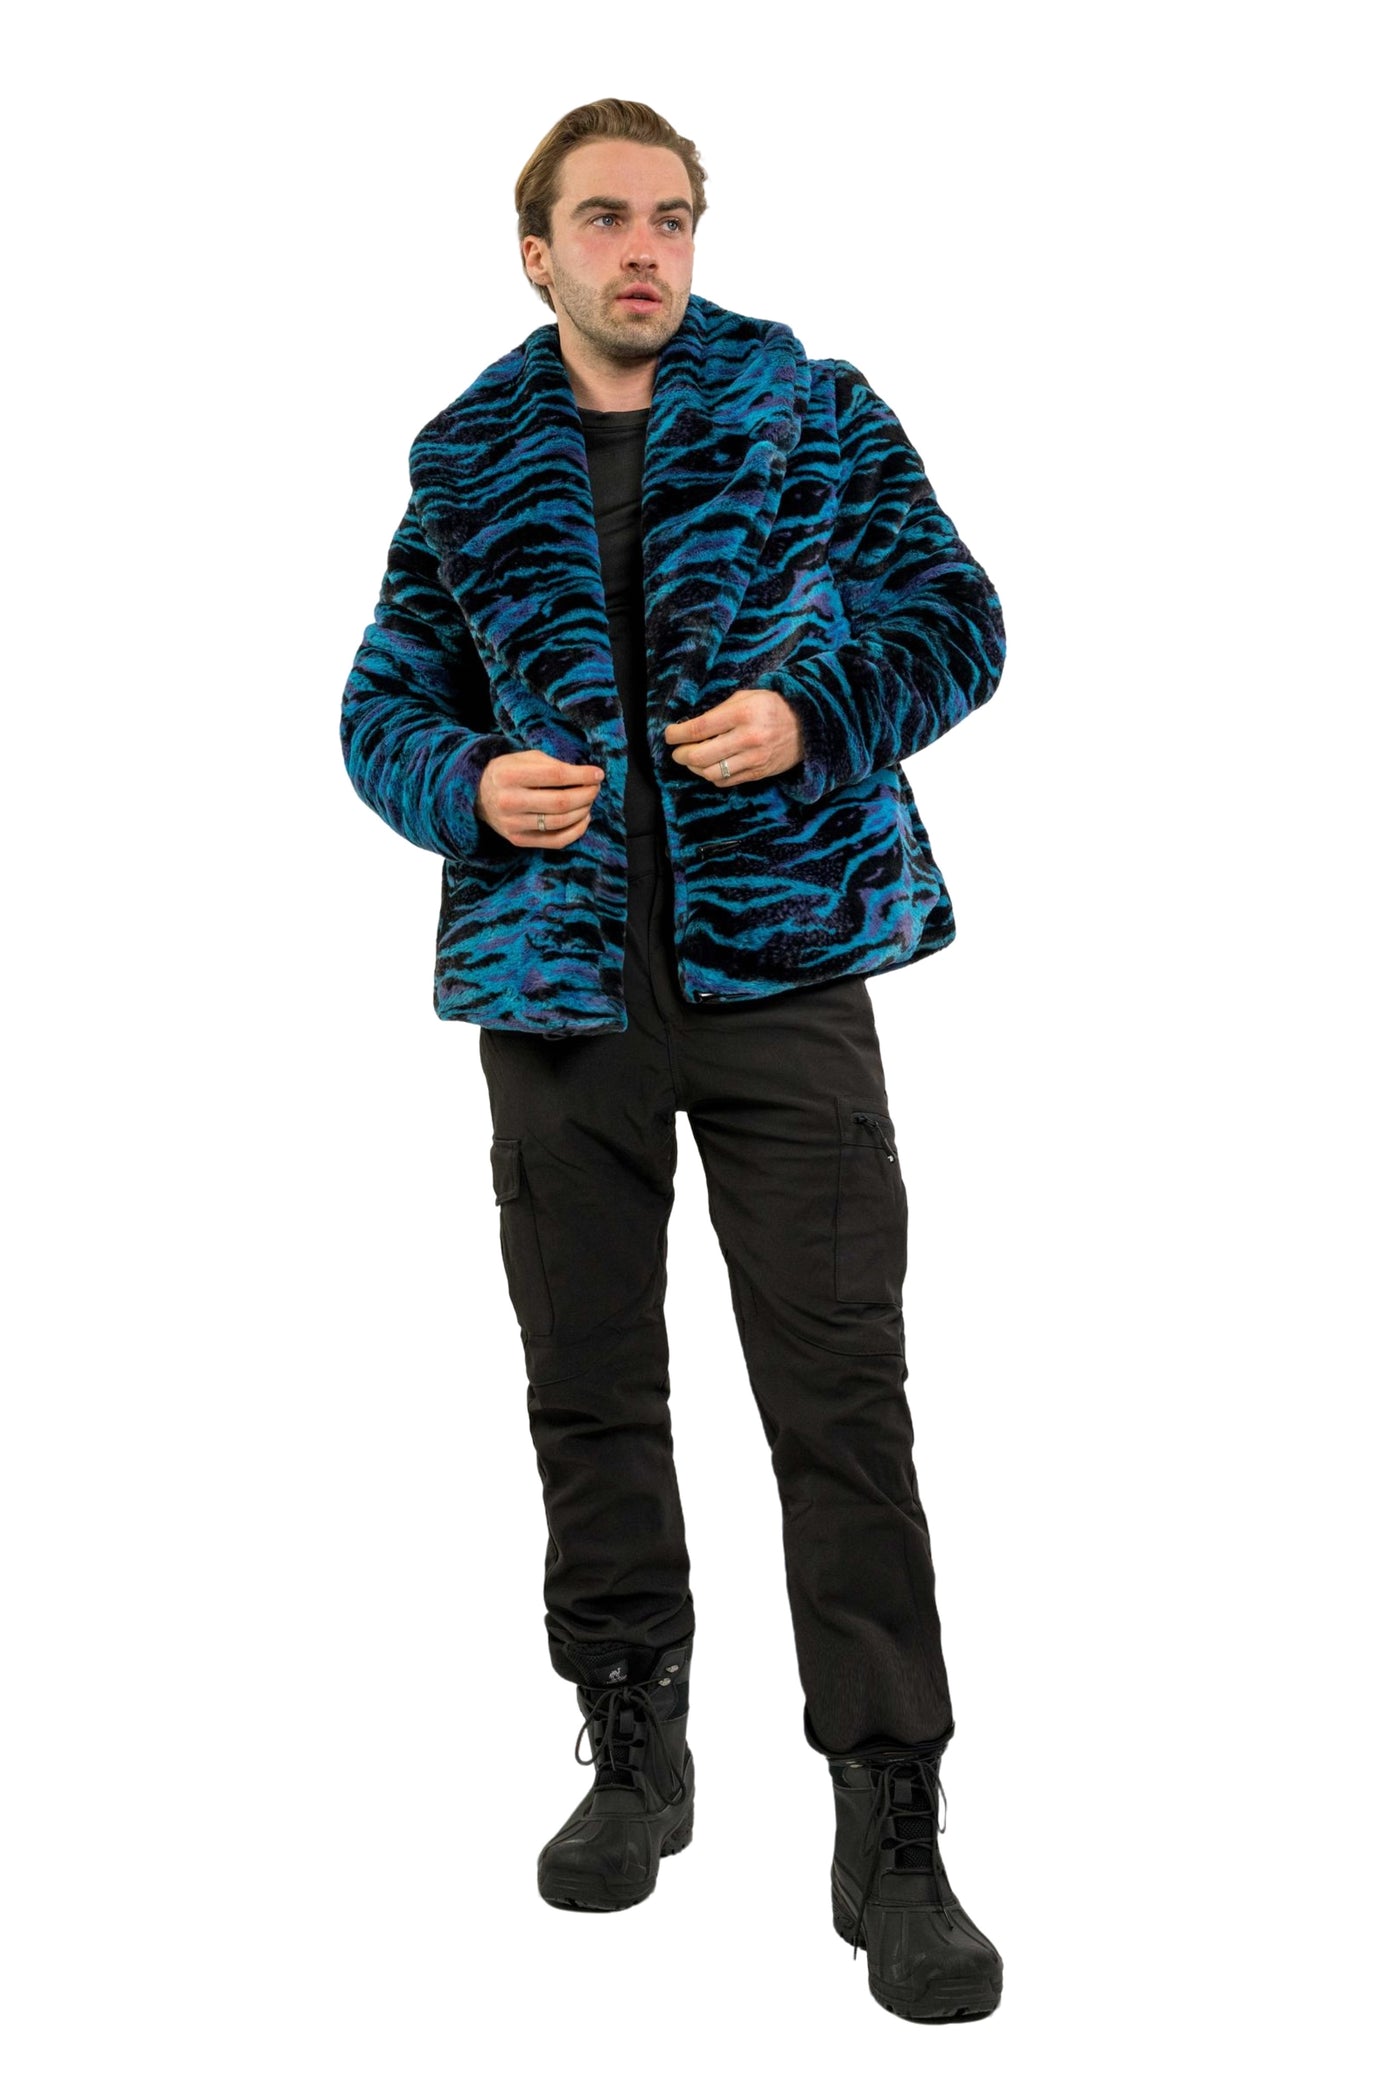 Men's Short Cozy Coat in "Electric Tiger" IN STOCK